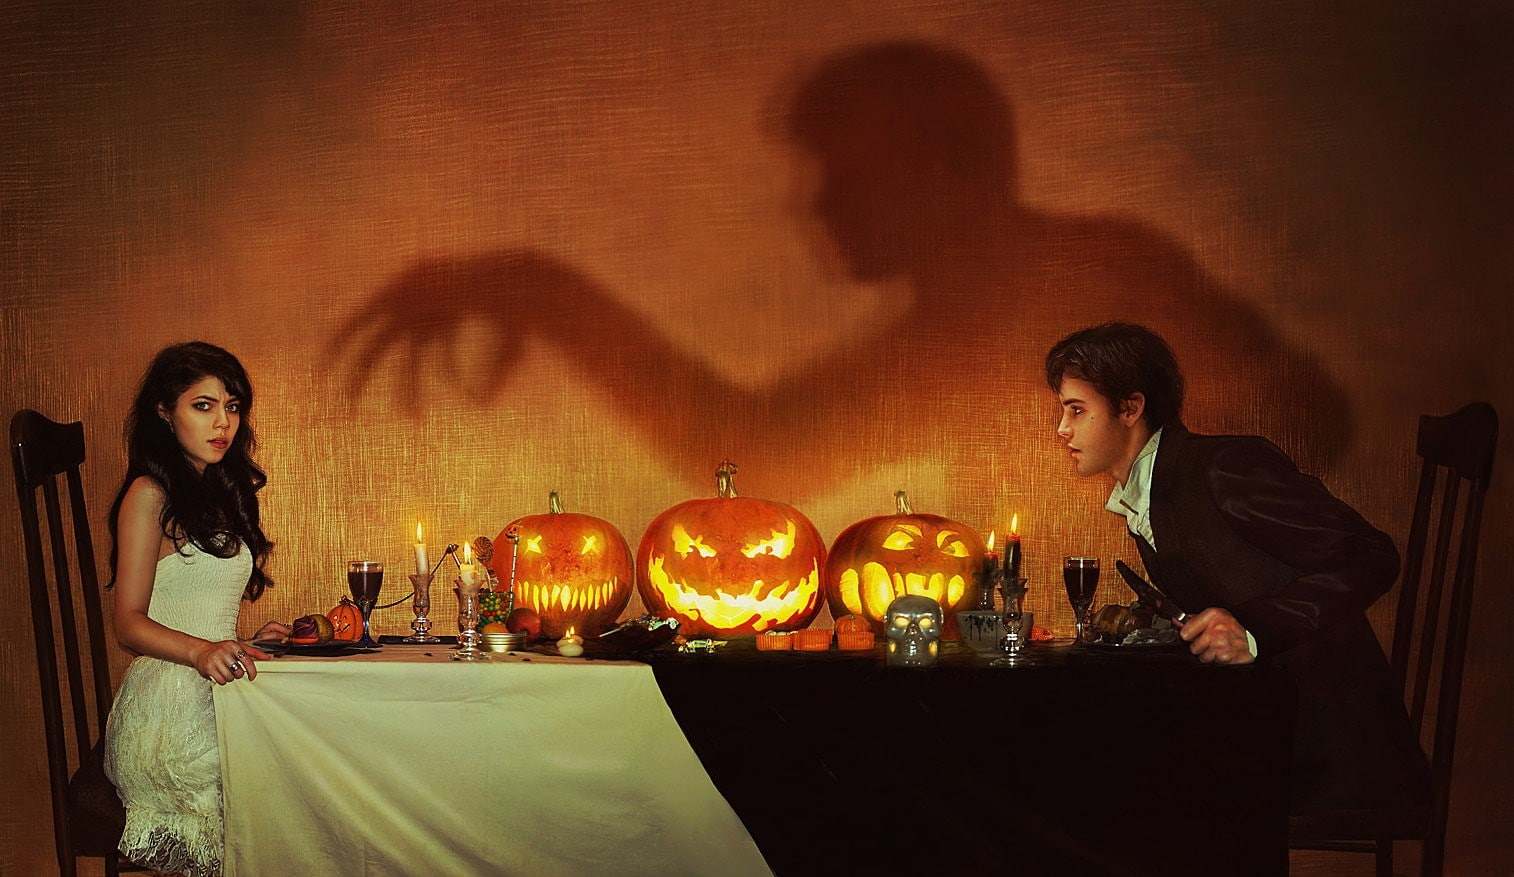 Dominique Wesson, Halloween, pumpkin, shadow, men, women, spooky